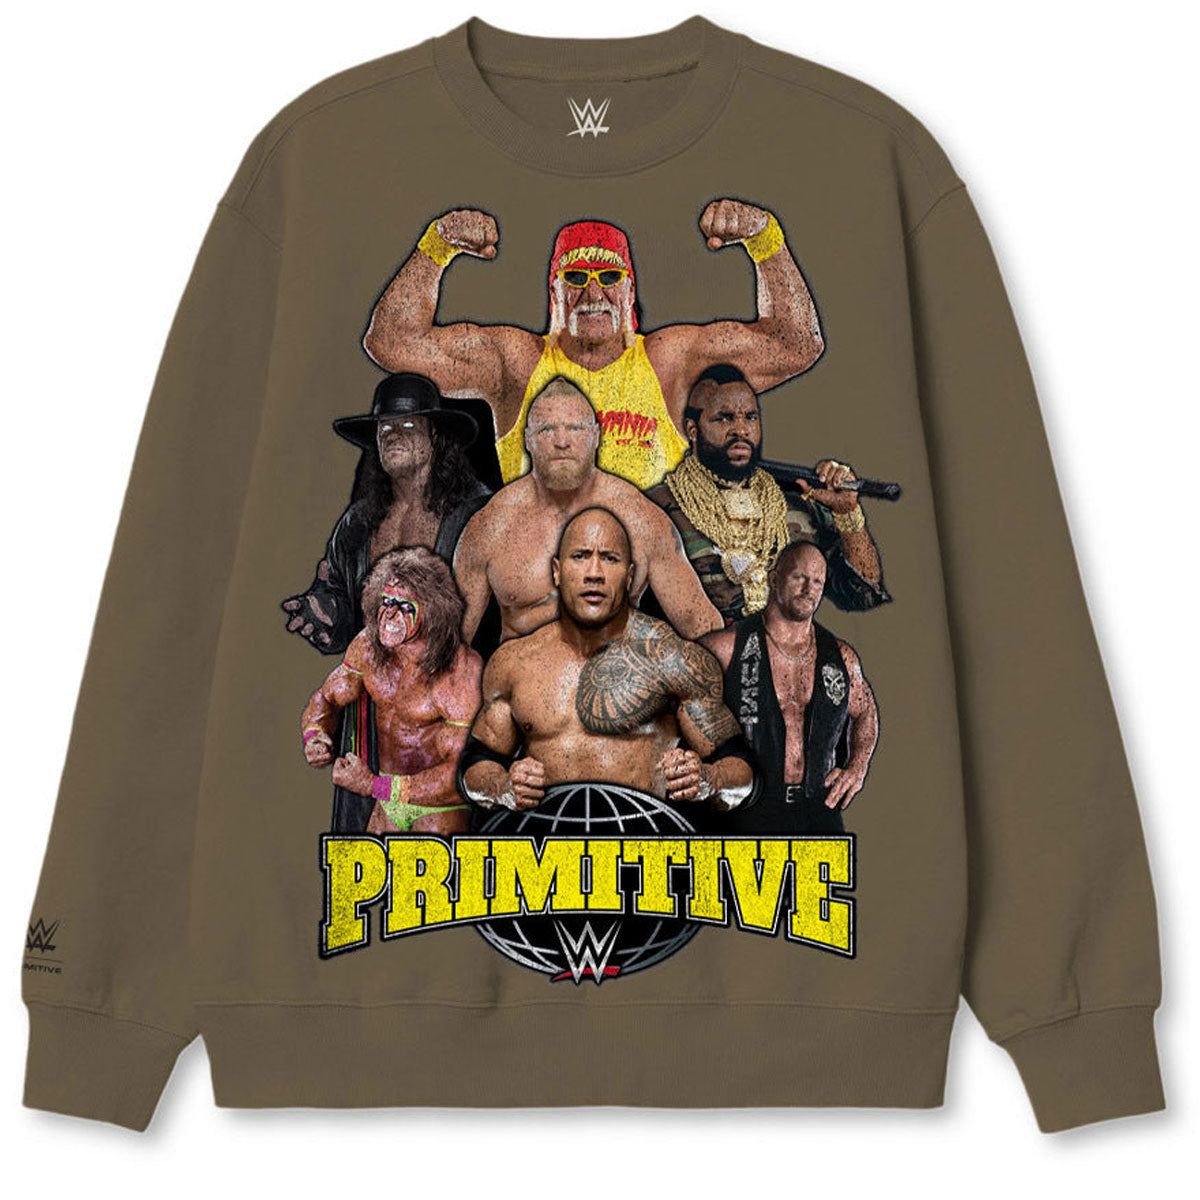 Primitive x WWE Mania Crewneck Sweatshirt - Sand image 1